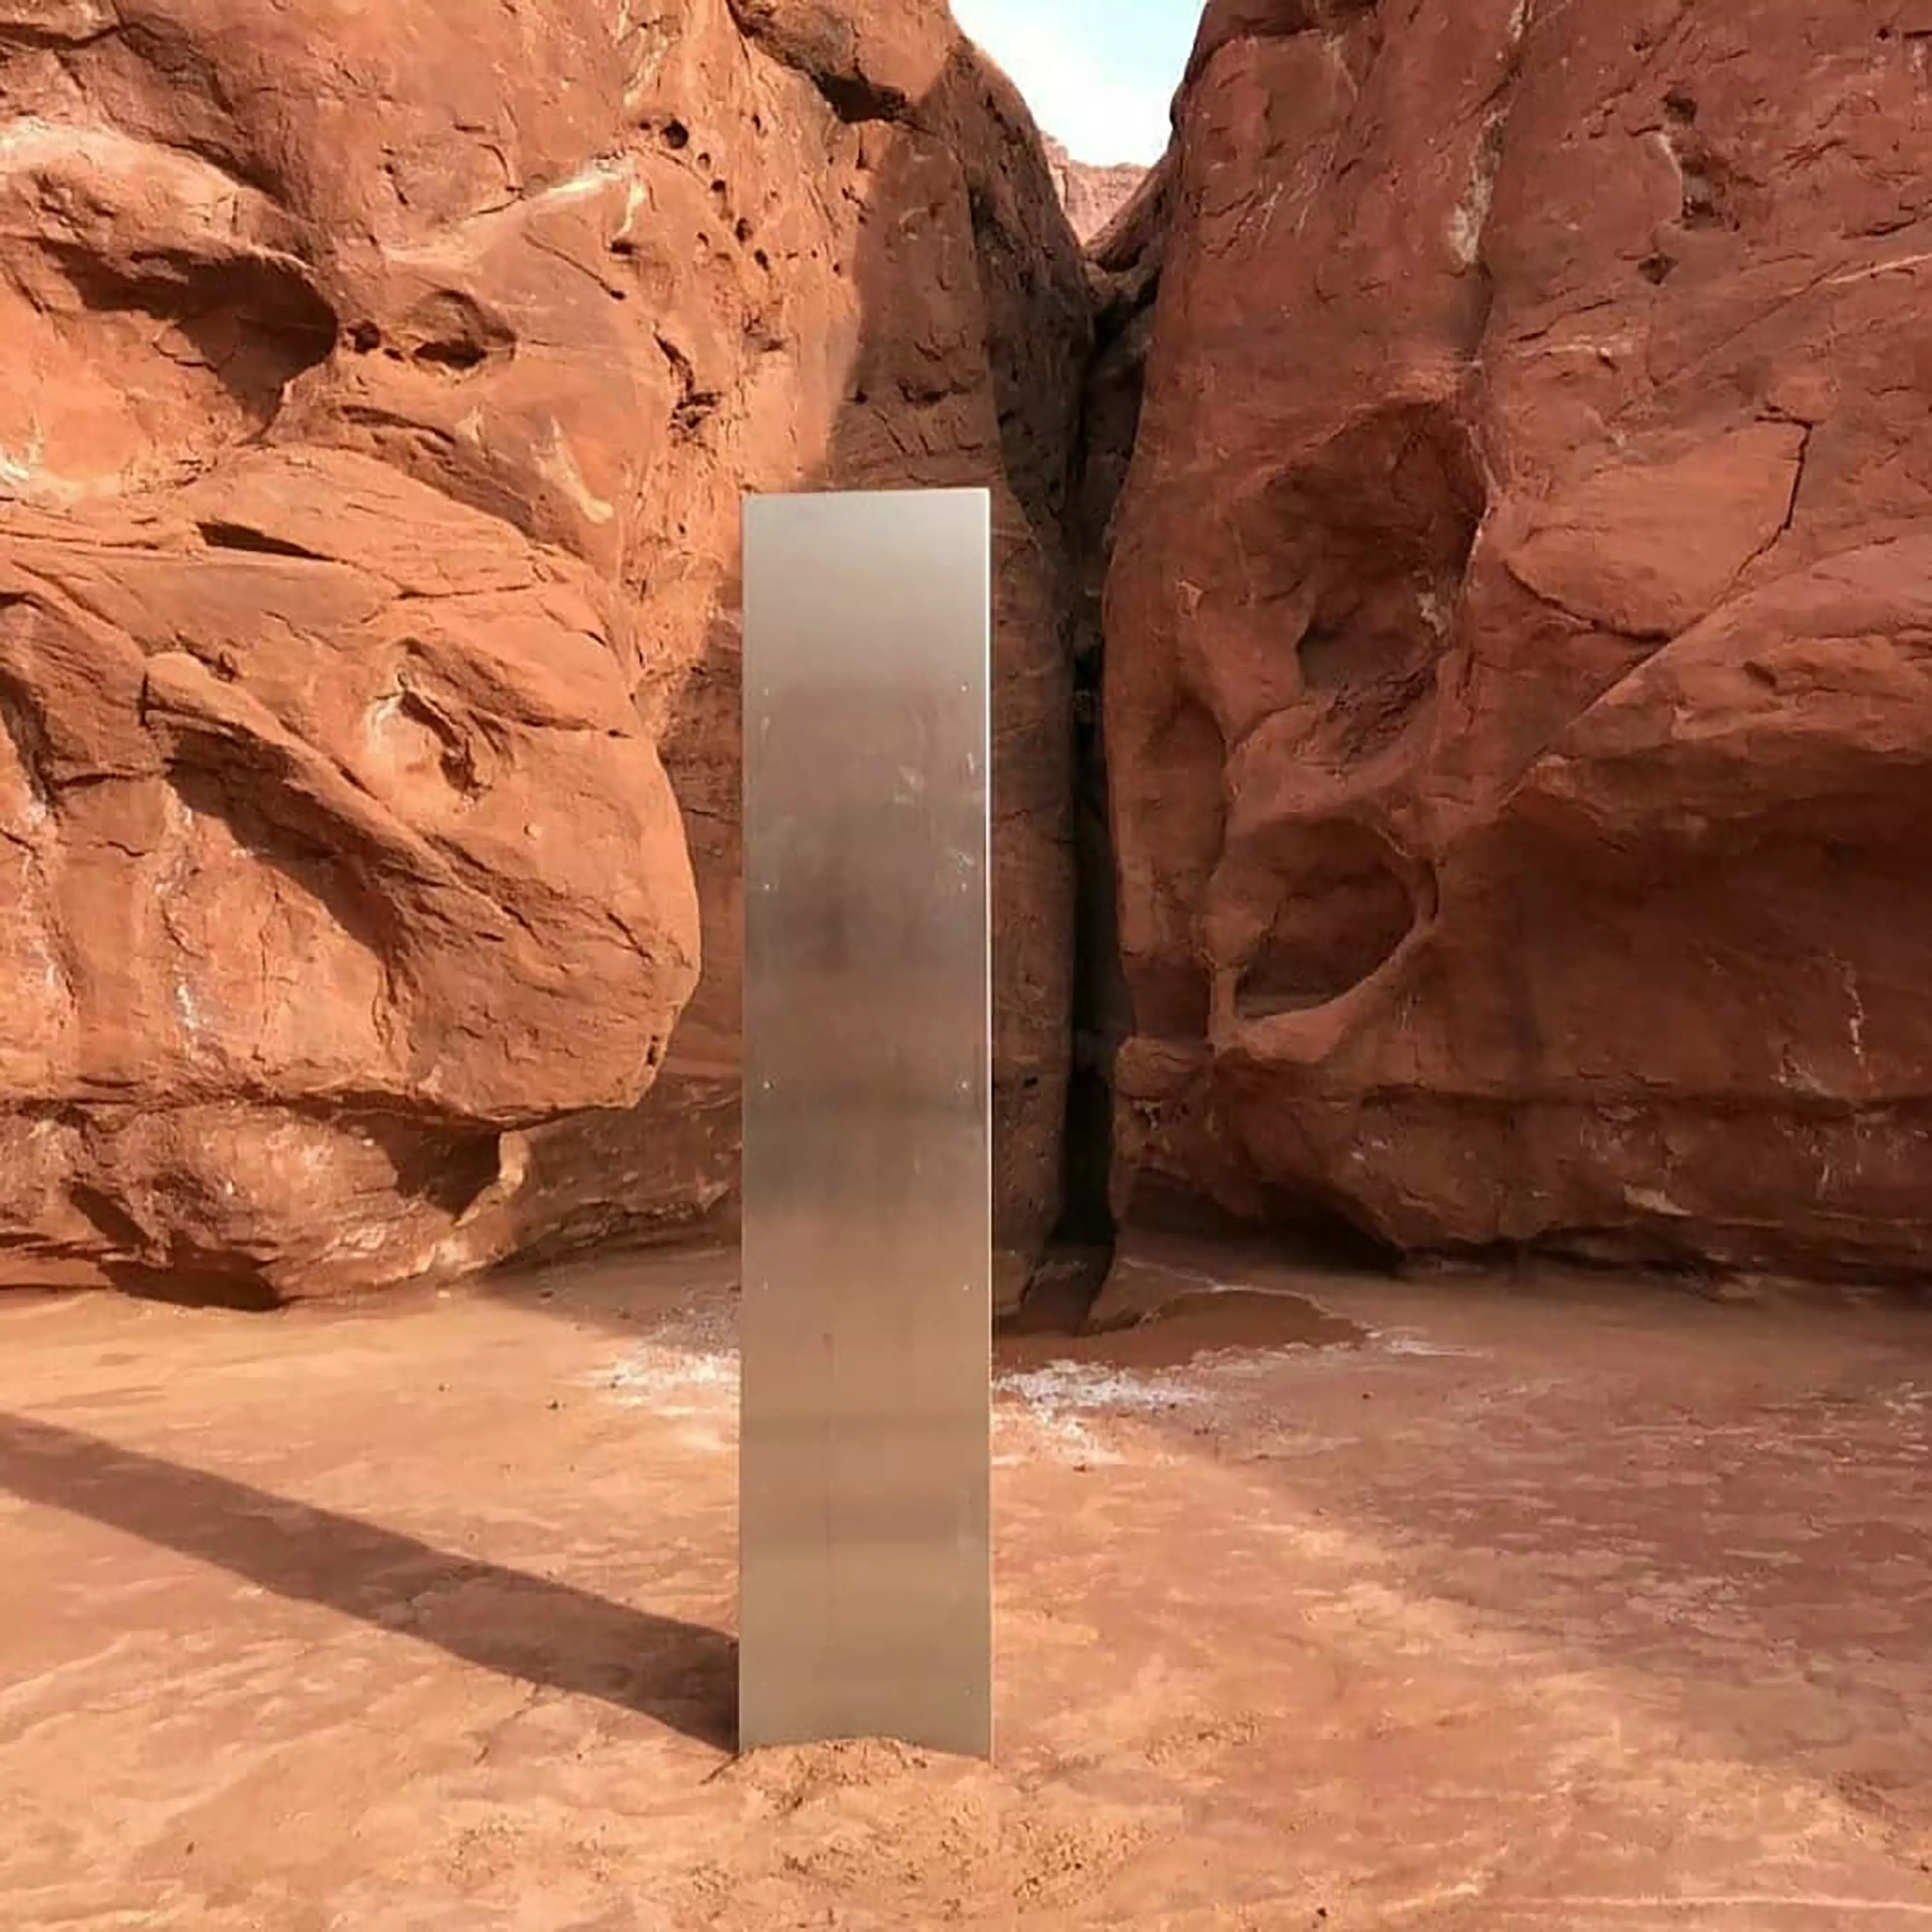 The Utah monolith.